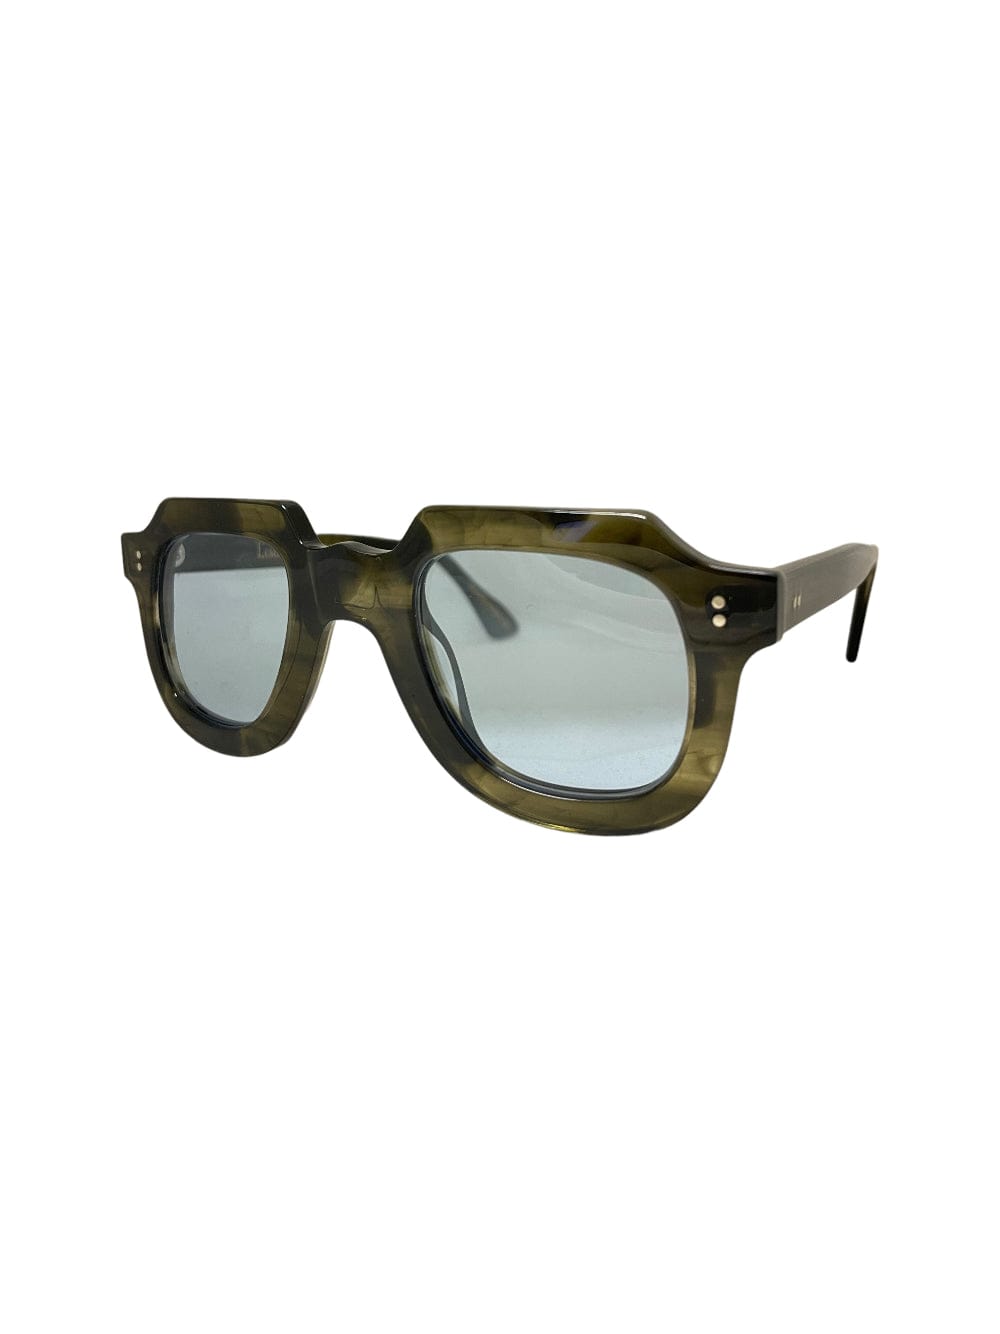 Lesca Odet - Limited Edition - Kaki Sunglasses | Smart Closet